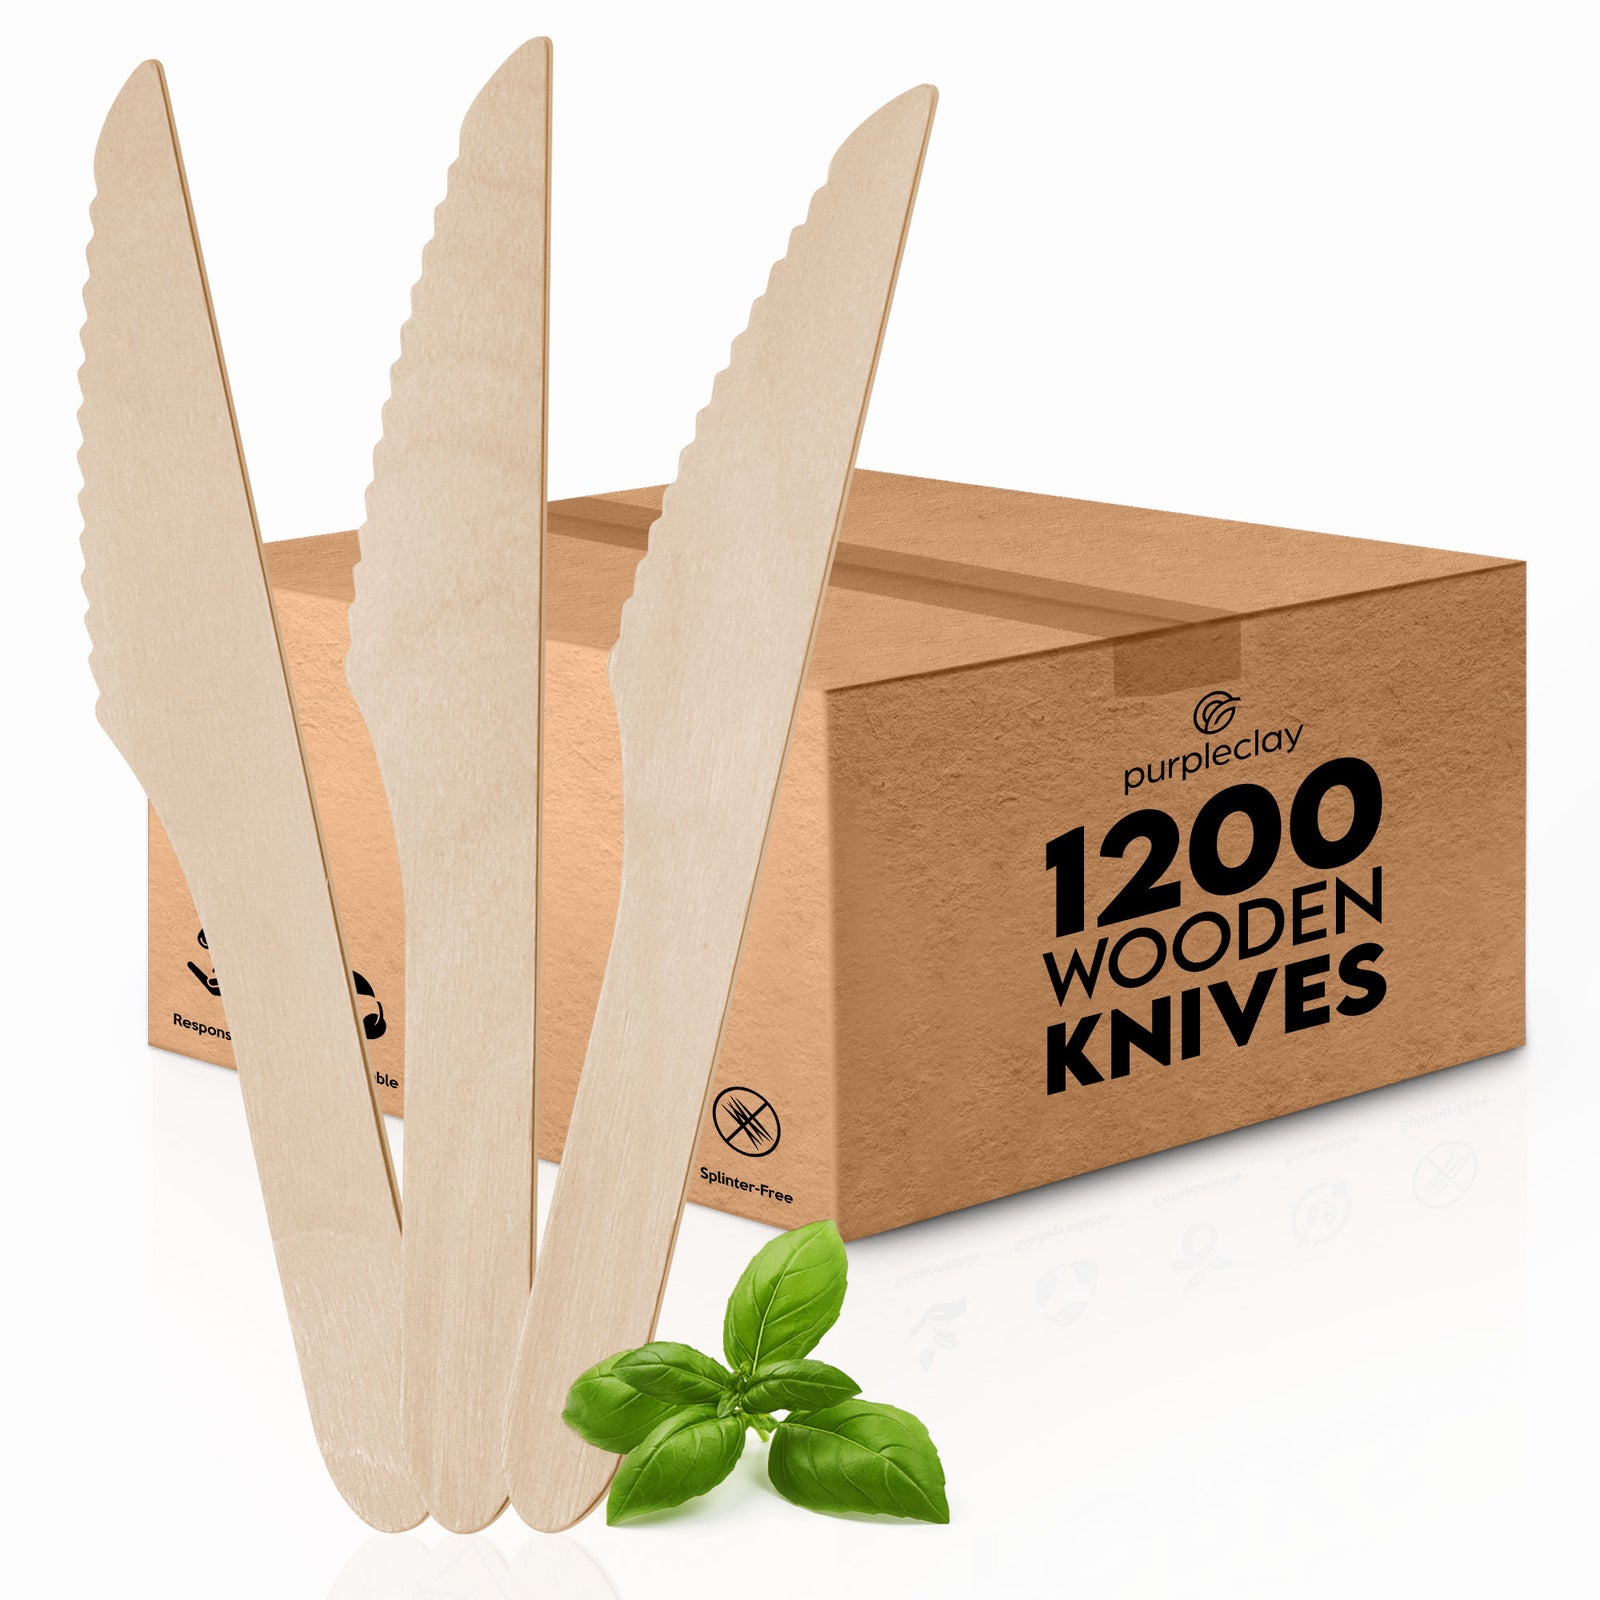 Wooden knives 1200pcs